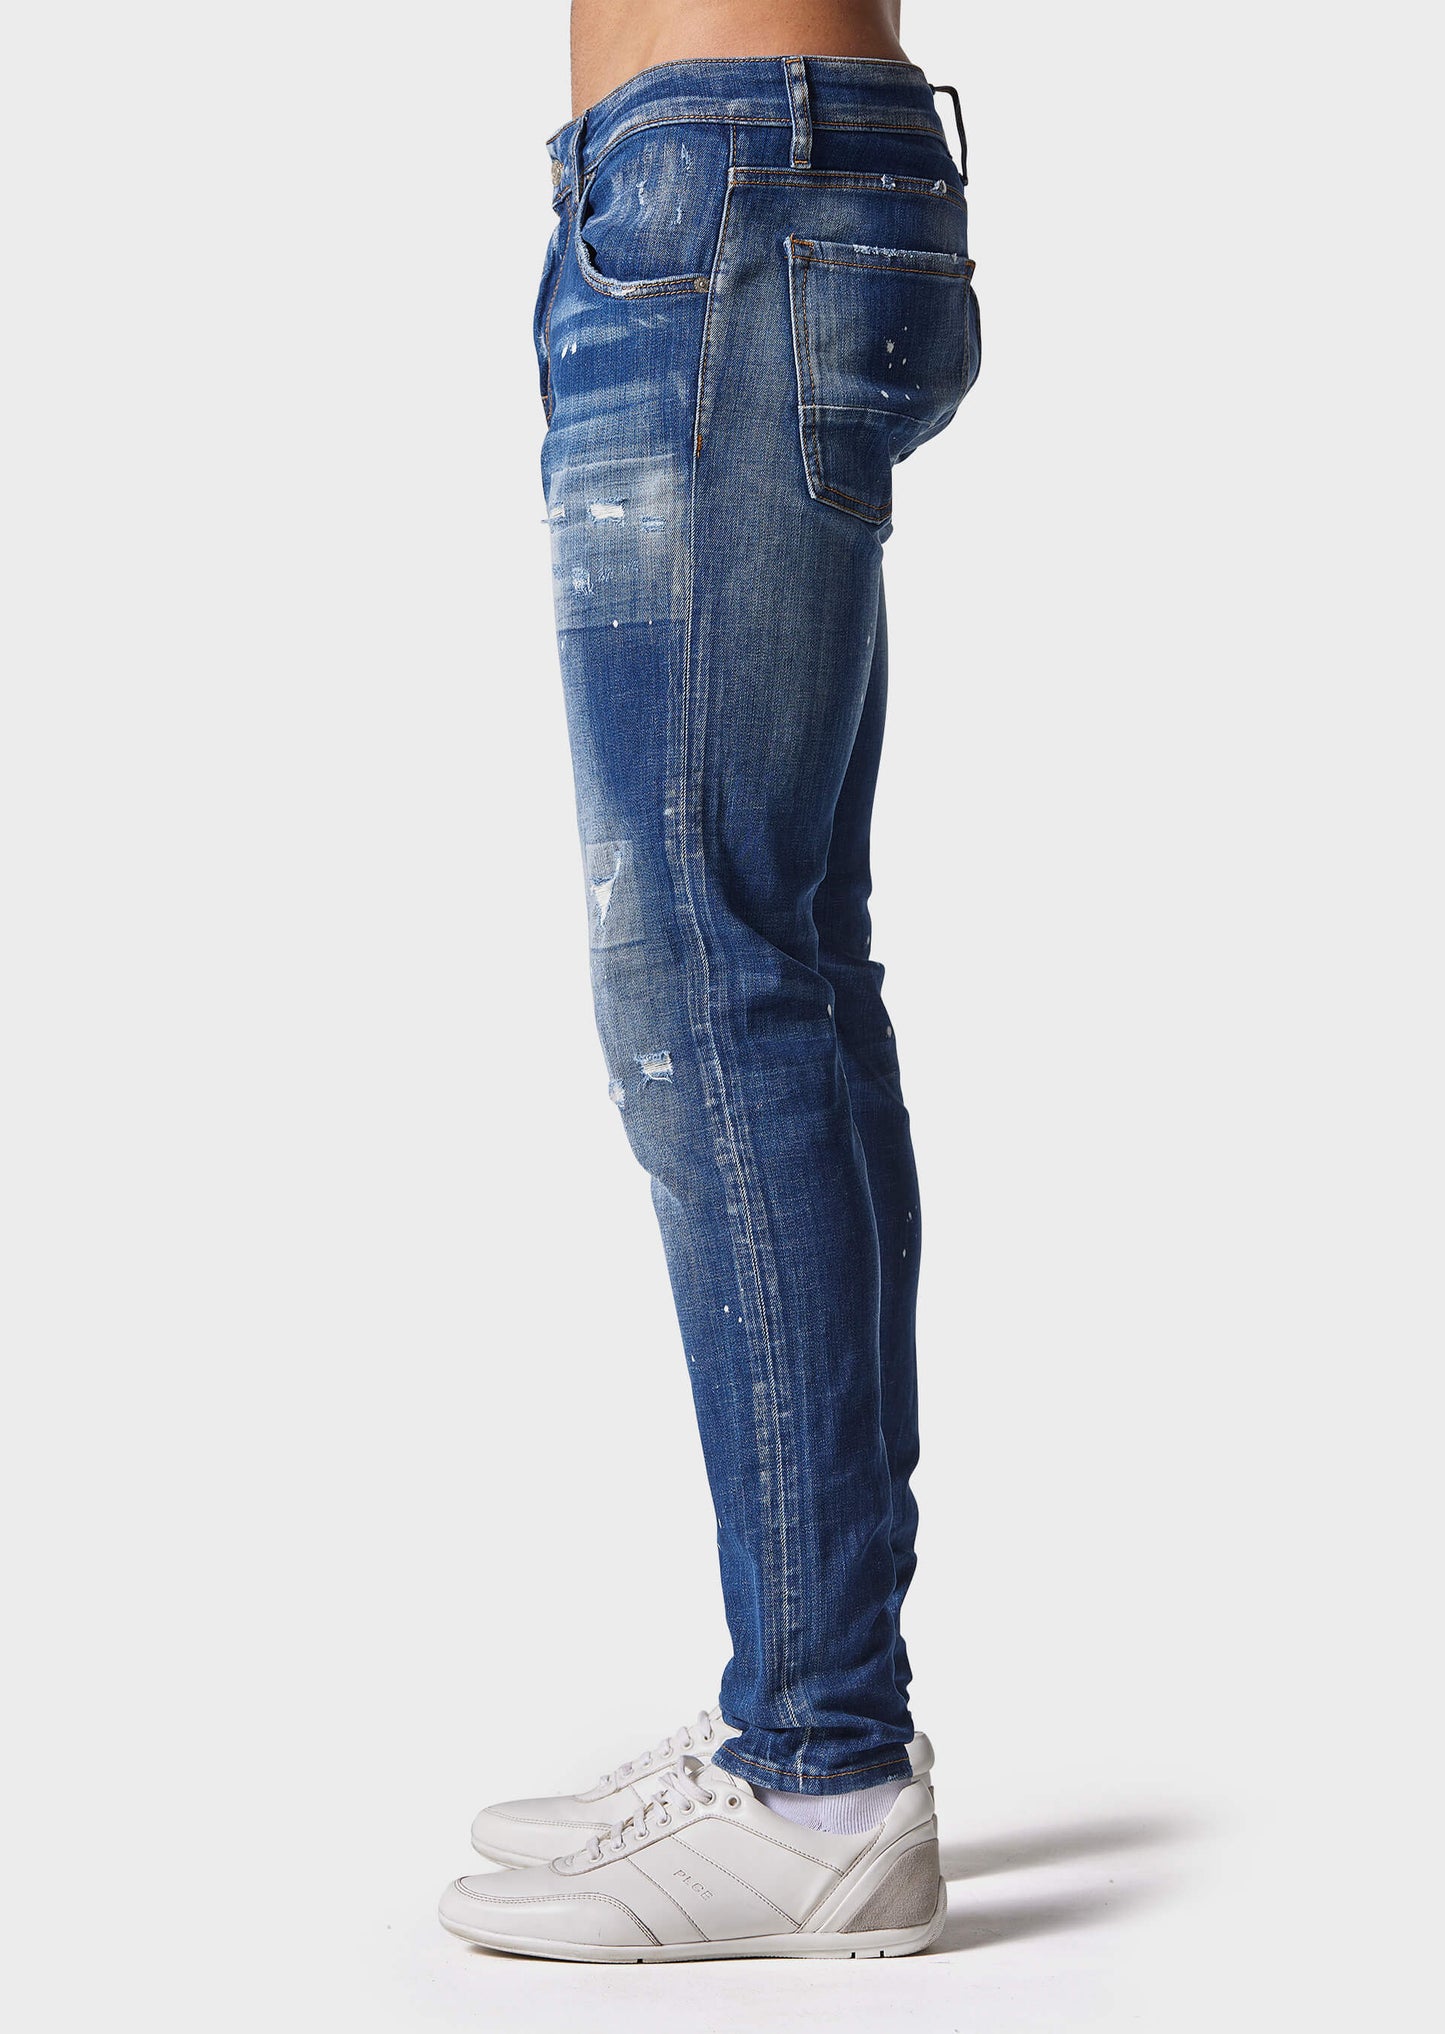 Deniro LAT 933 Slim Fit Jeans